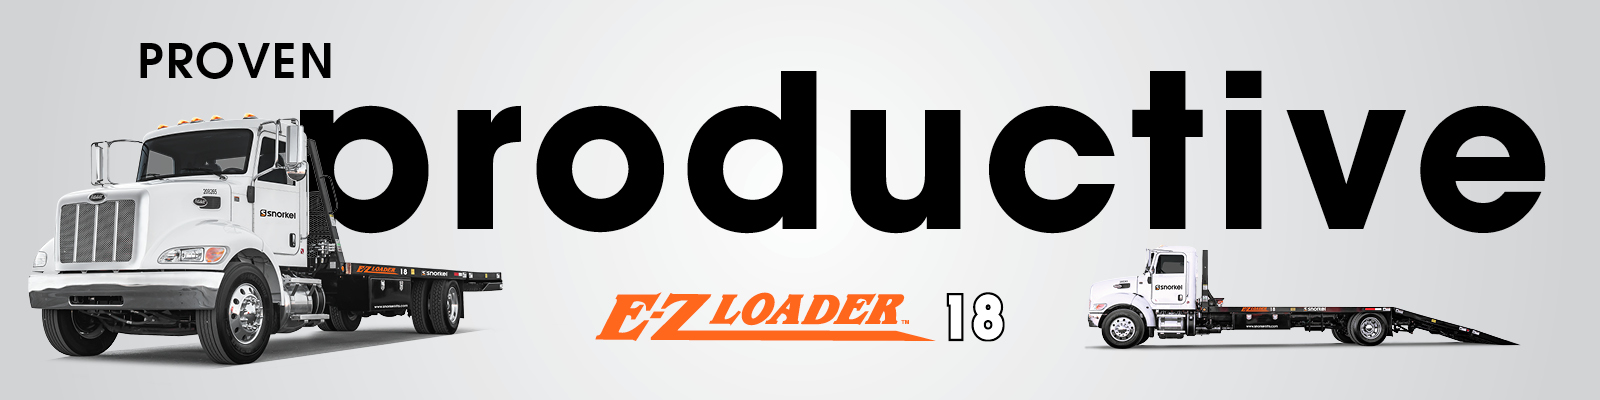 E-Z-Loader-18